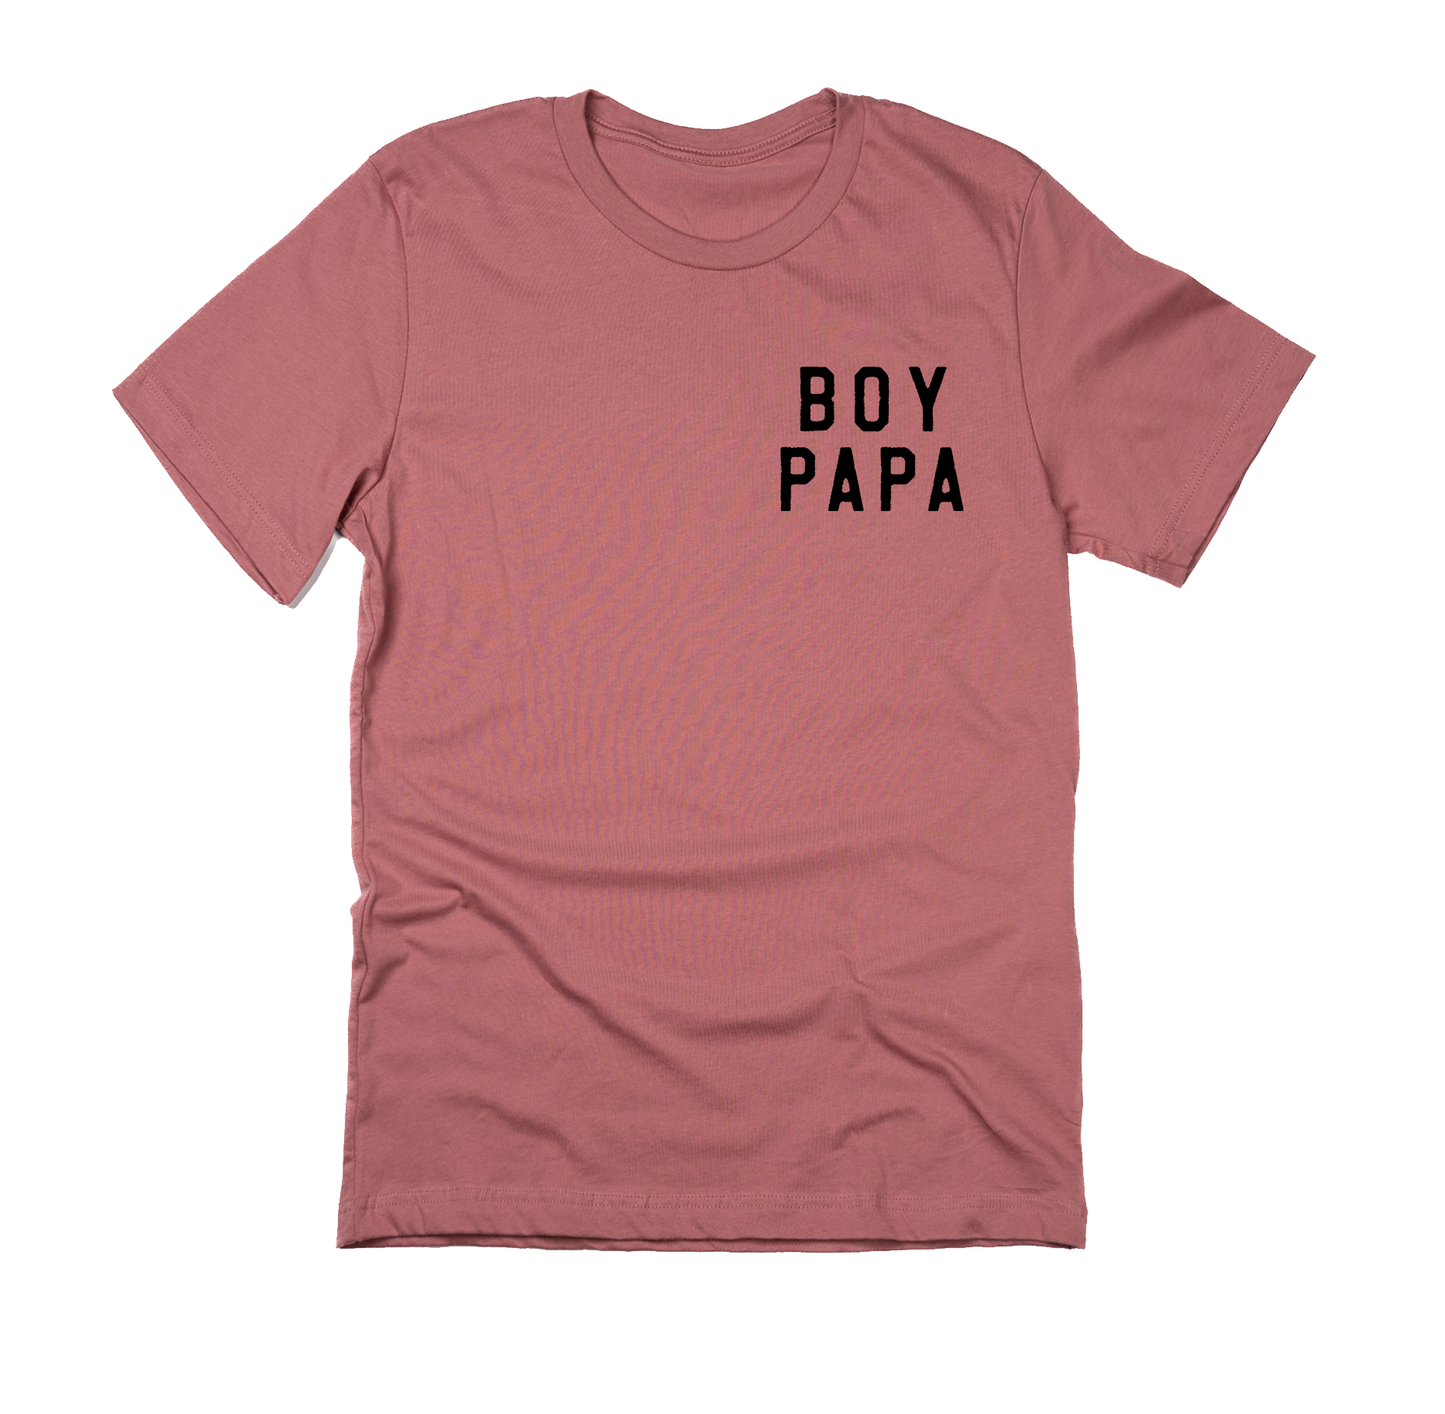 Boy Papa (Pocket, Black) - Tee (Mauve)